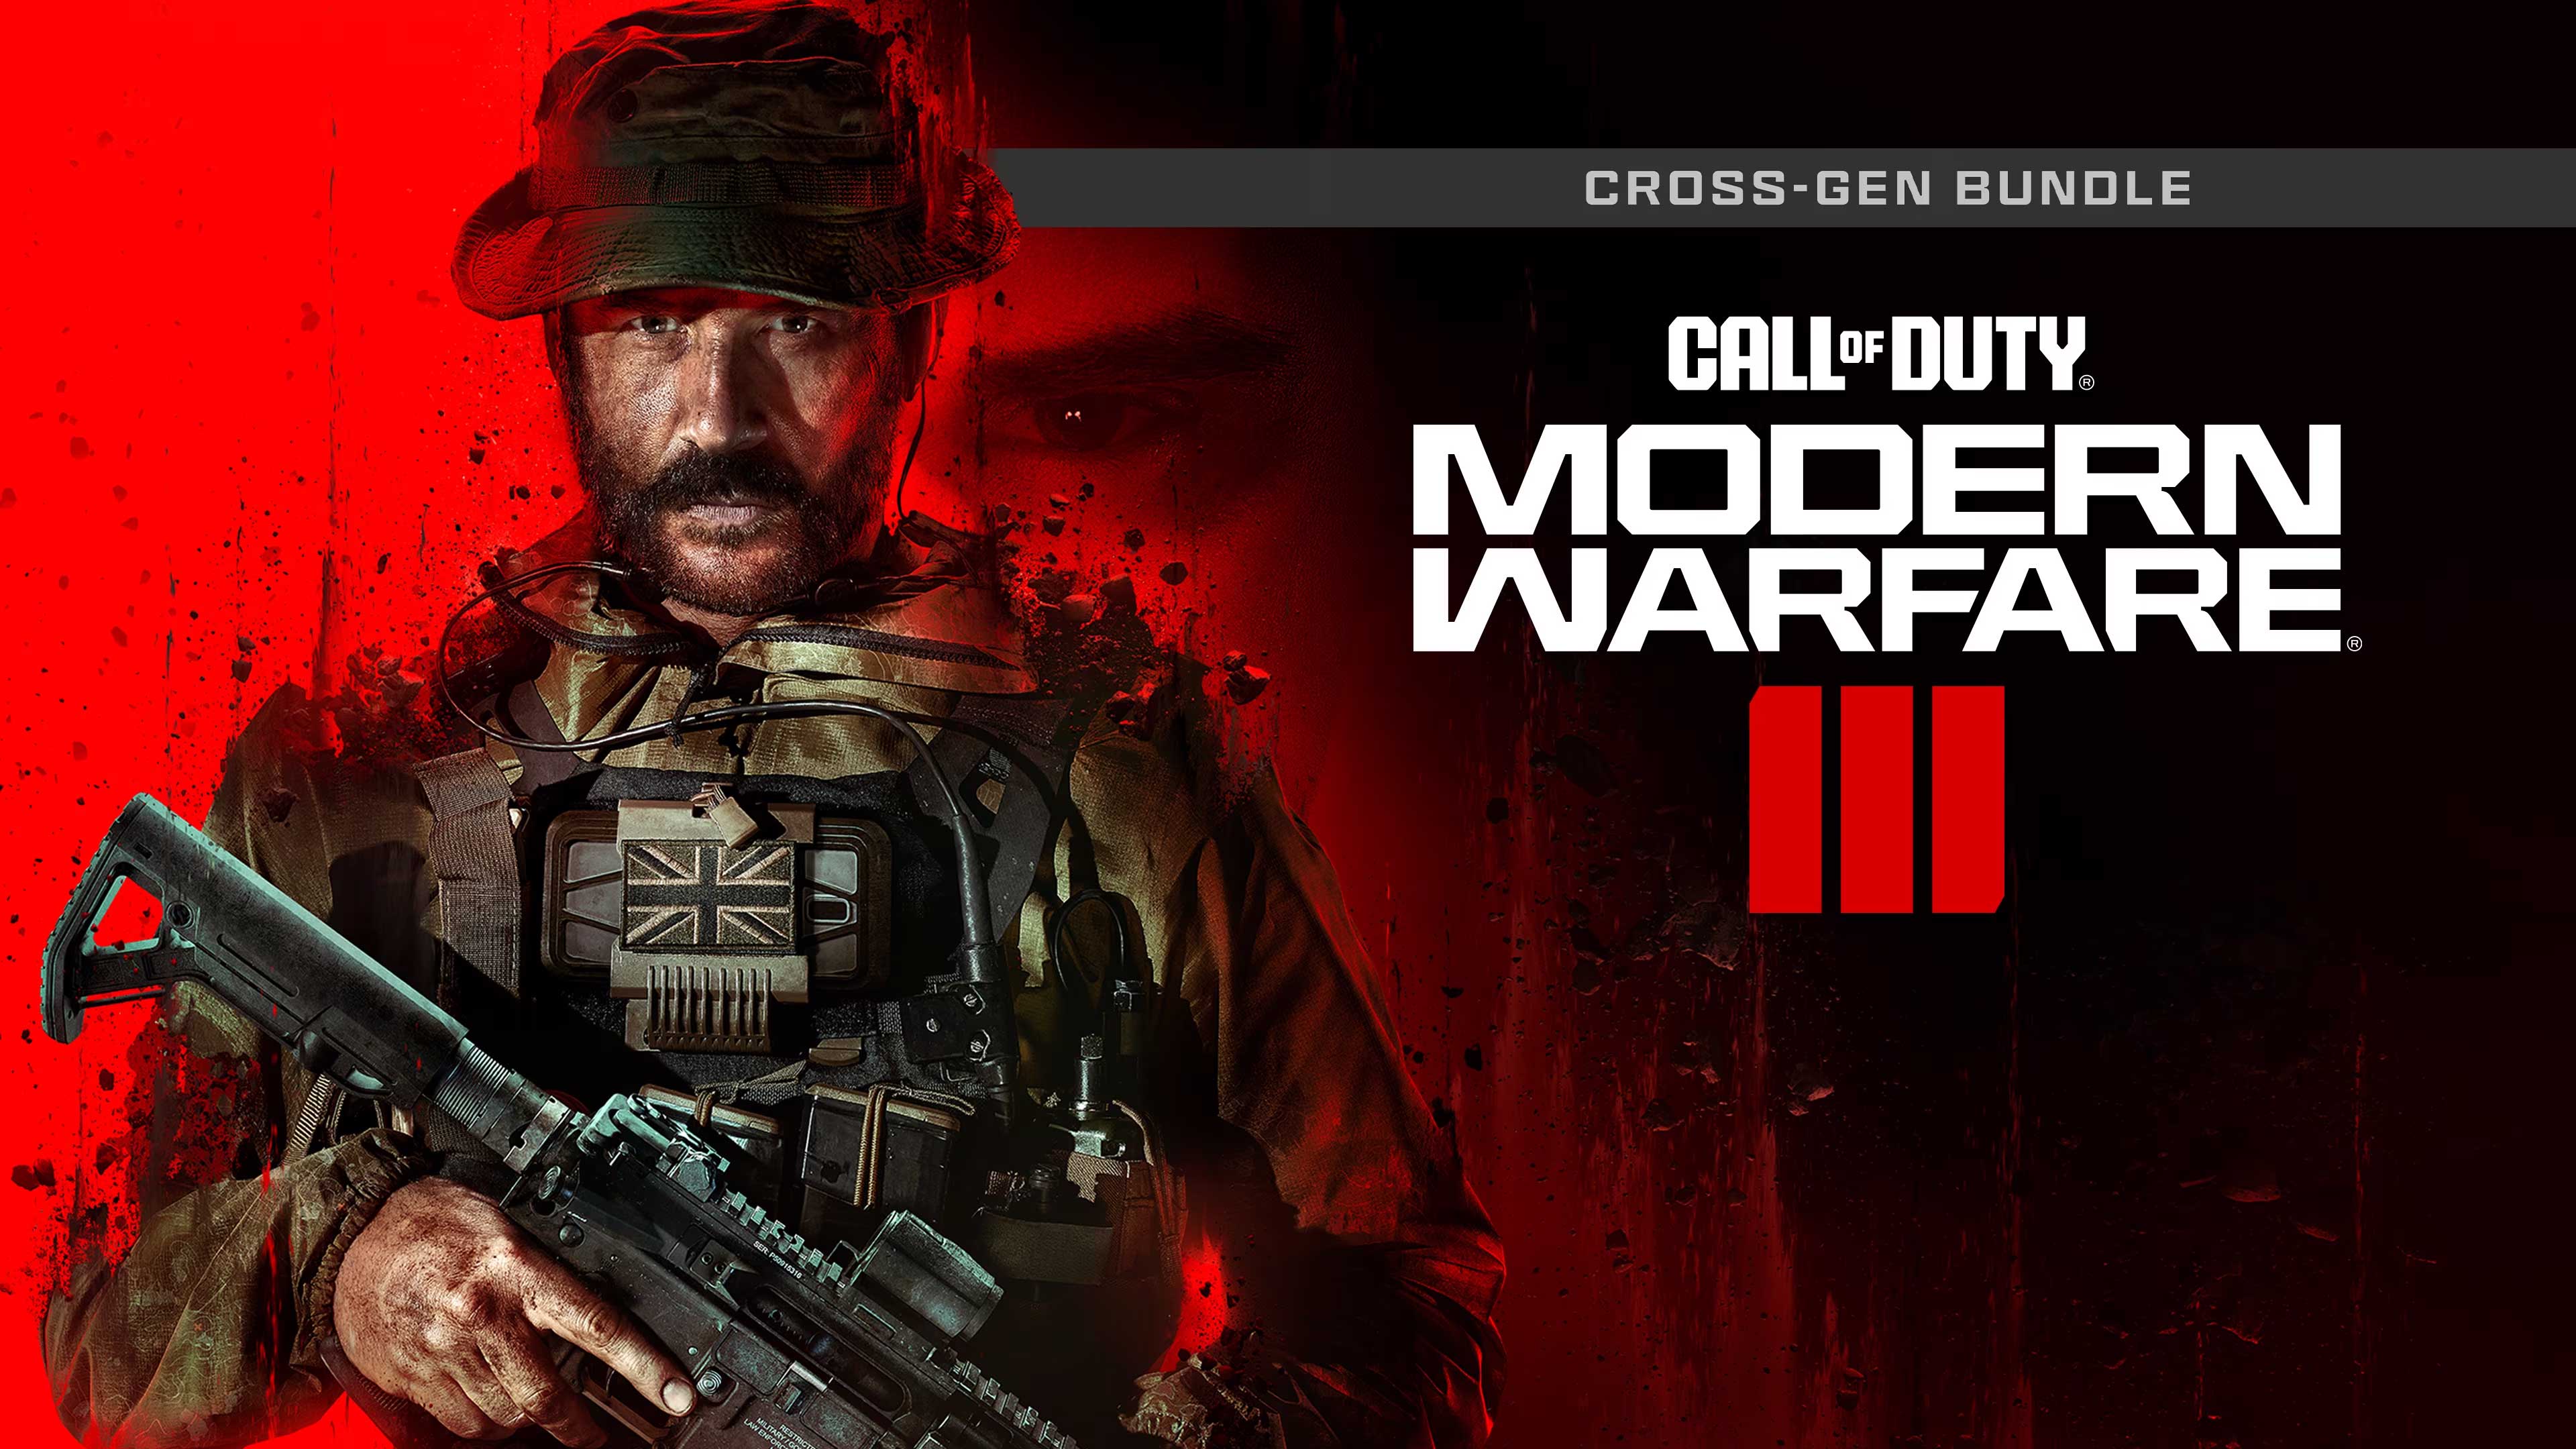 Call of Duty: Modern Warfare III - Cross-Gen Bundle, Game Pro Central, gameprocentral.com